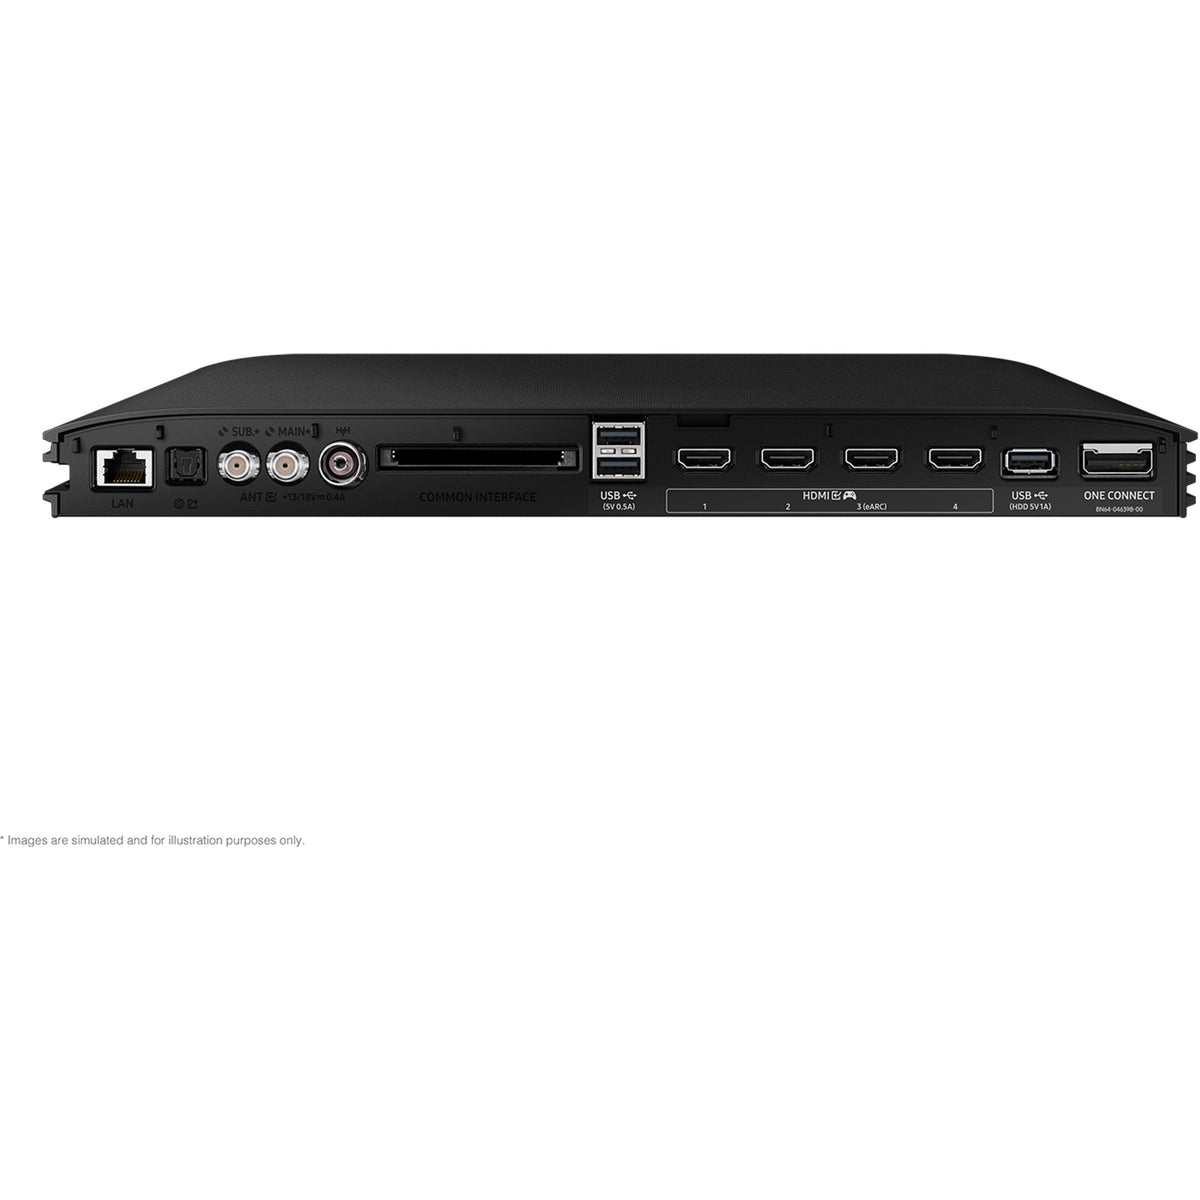 Samsung 75&quot; QN700C Neo QLED 8K HDR Smart TV - Titan Black | QE75QN700CTXXU from Samsung - DID Electrical